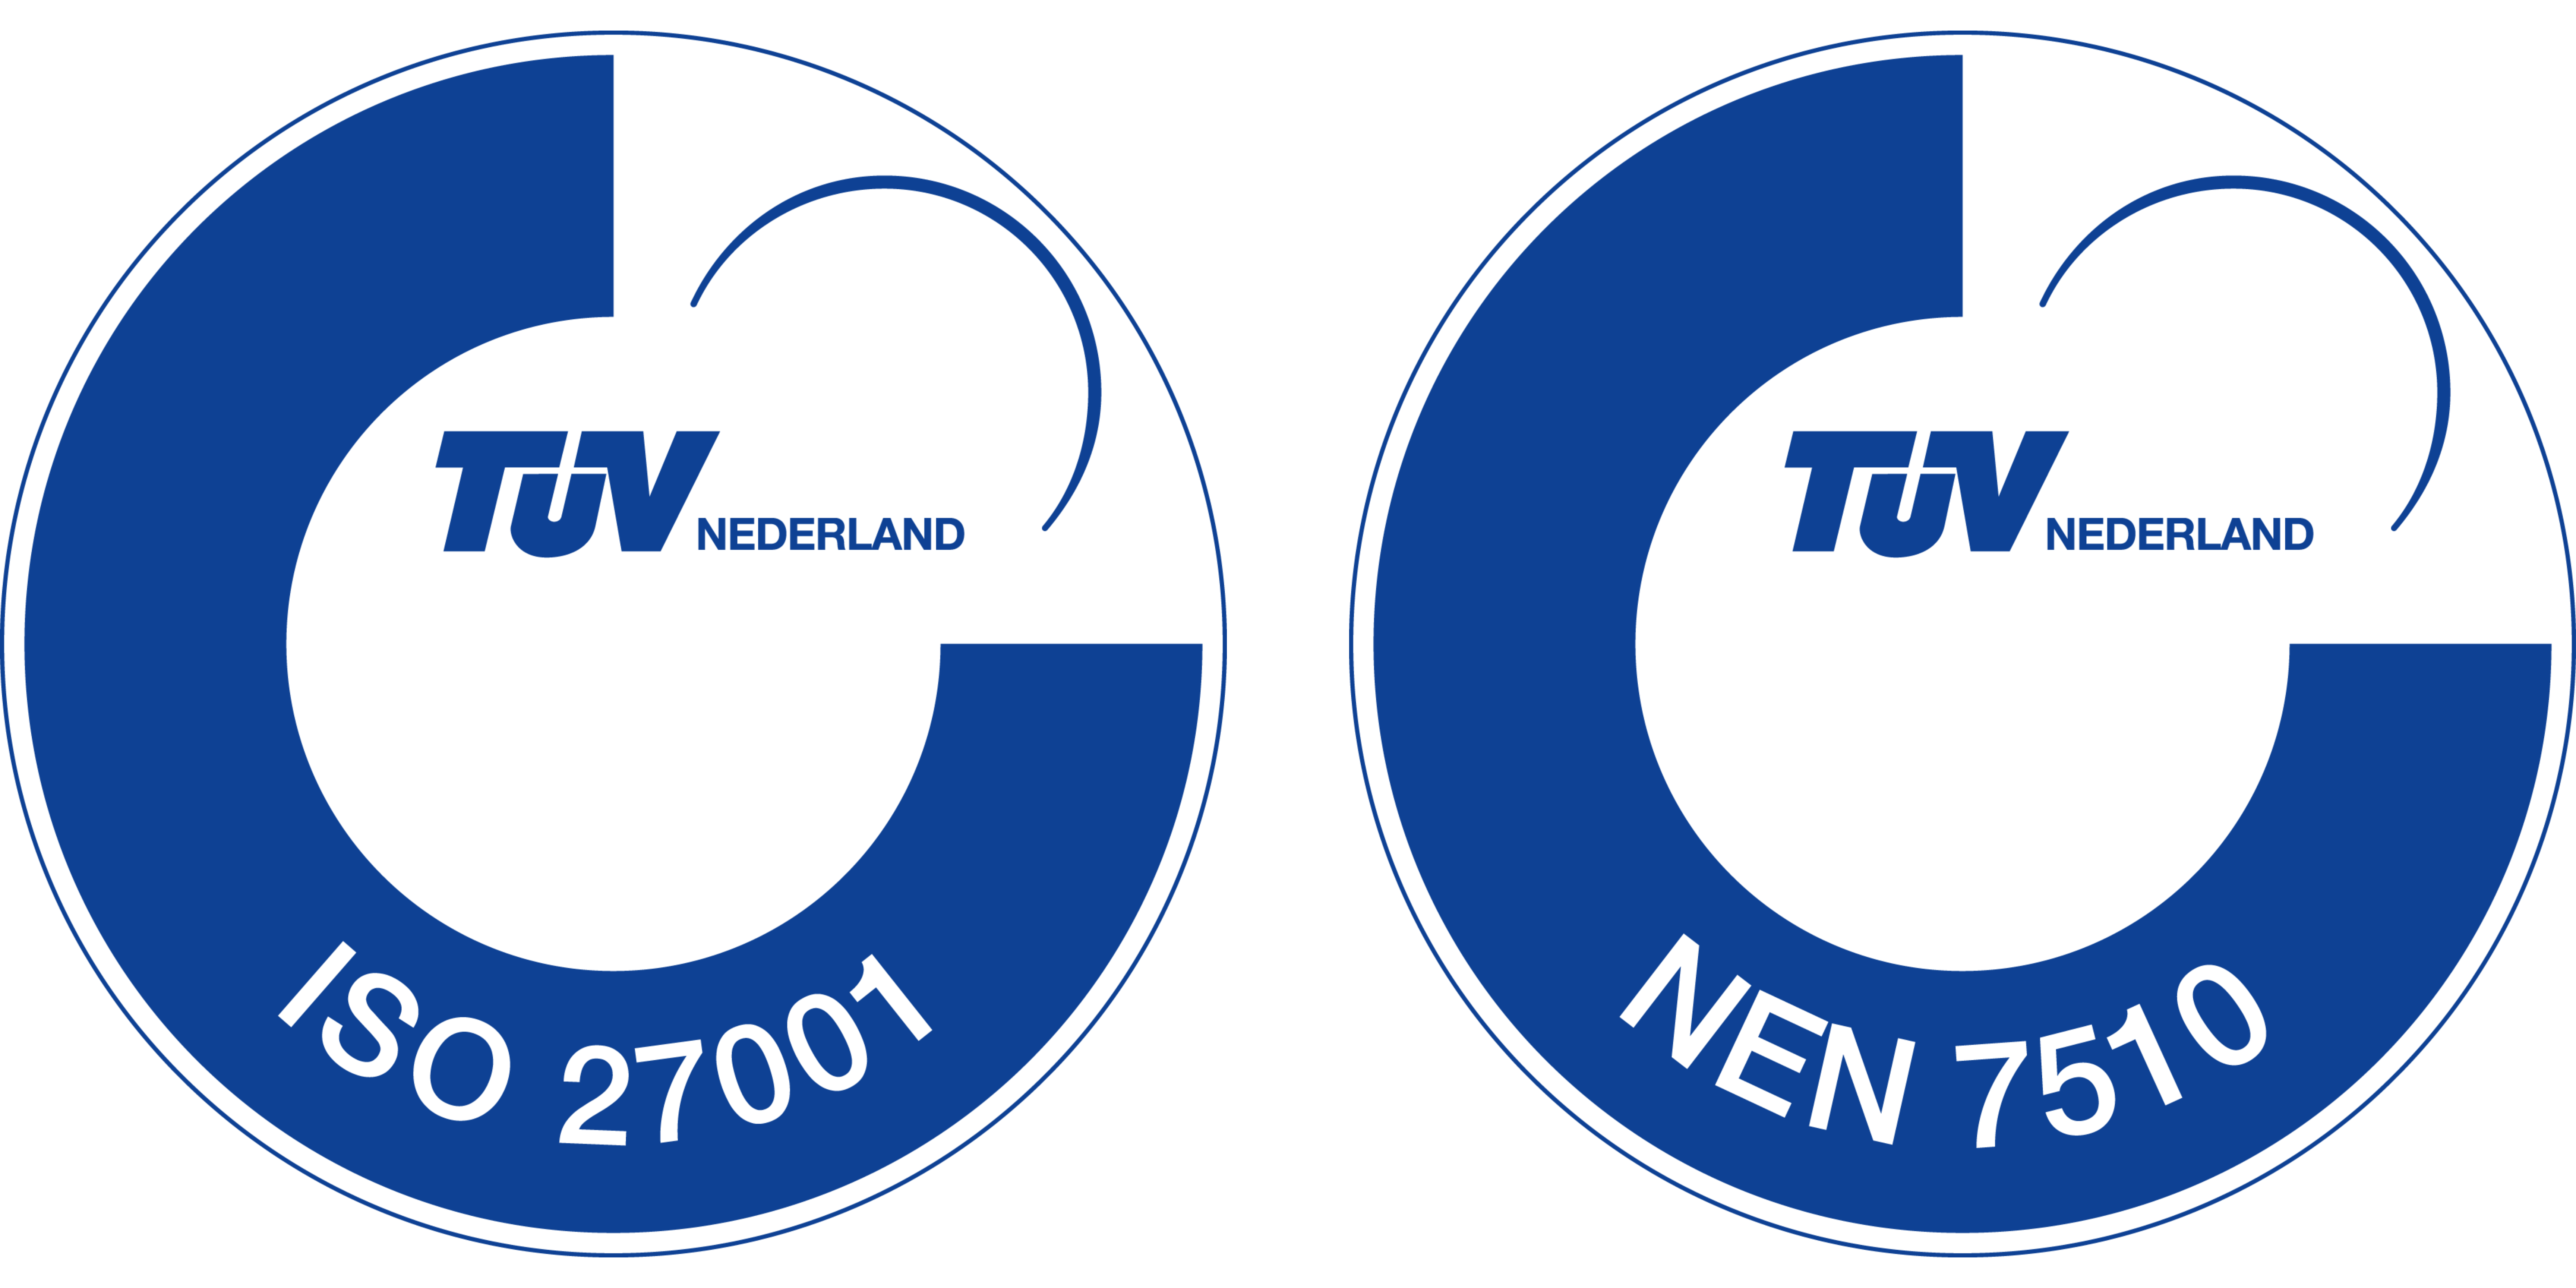 ISO 27001 en NEN 7510 Metrisquare